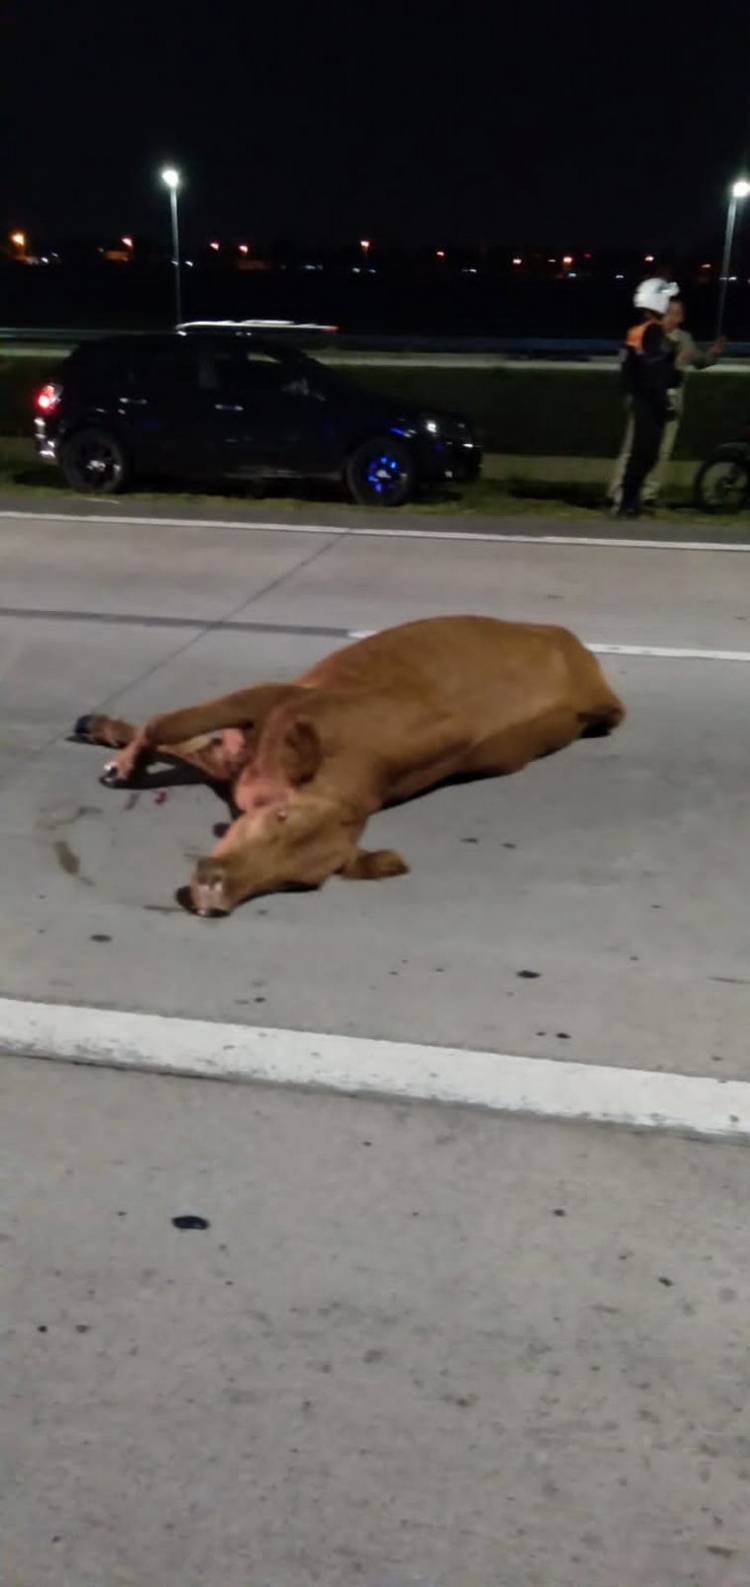 Atropelló una vaca cerca del estadio Kempes